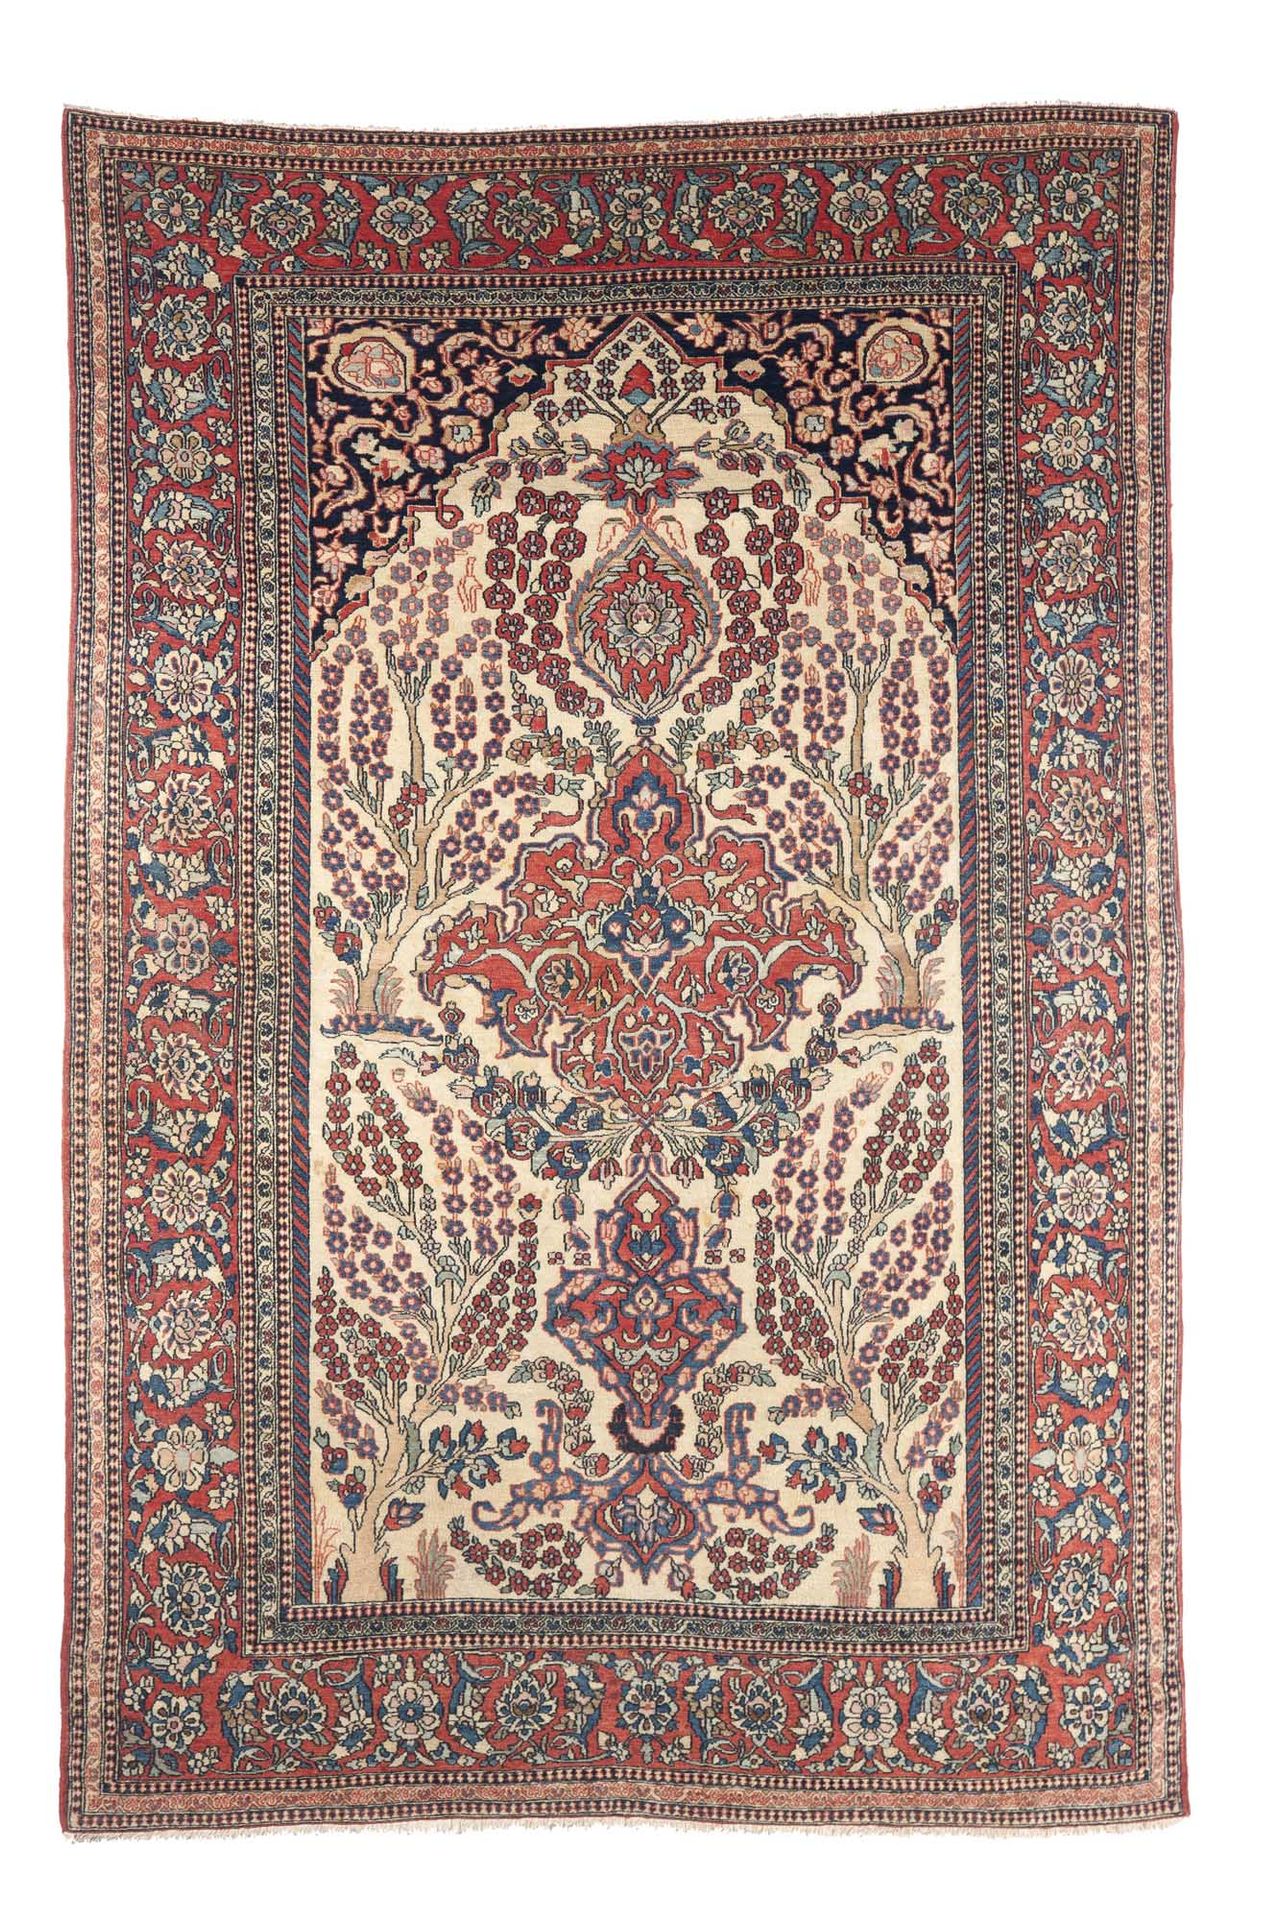 Null ISPAHAN carpet (Persia), late 19th century

Dimensions : 205 x 137cm

Techn&hellip;